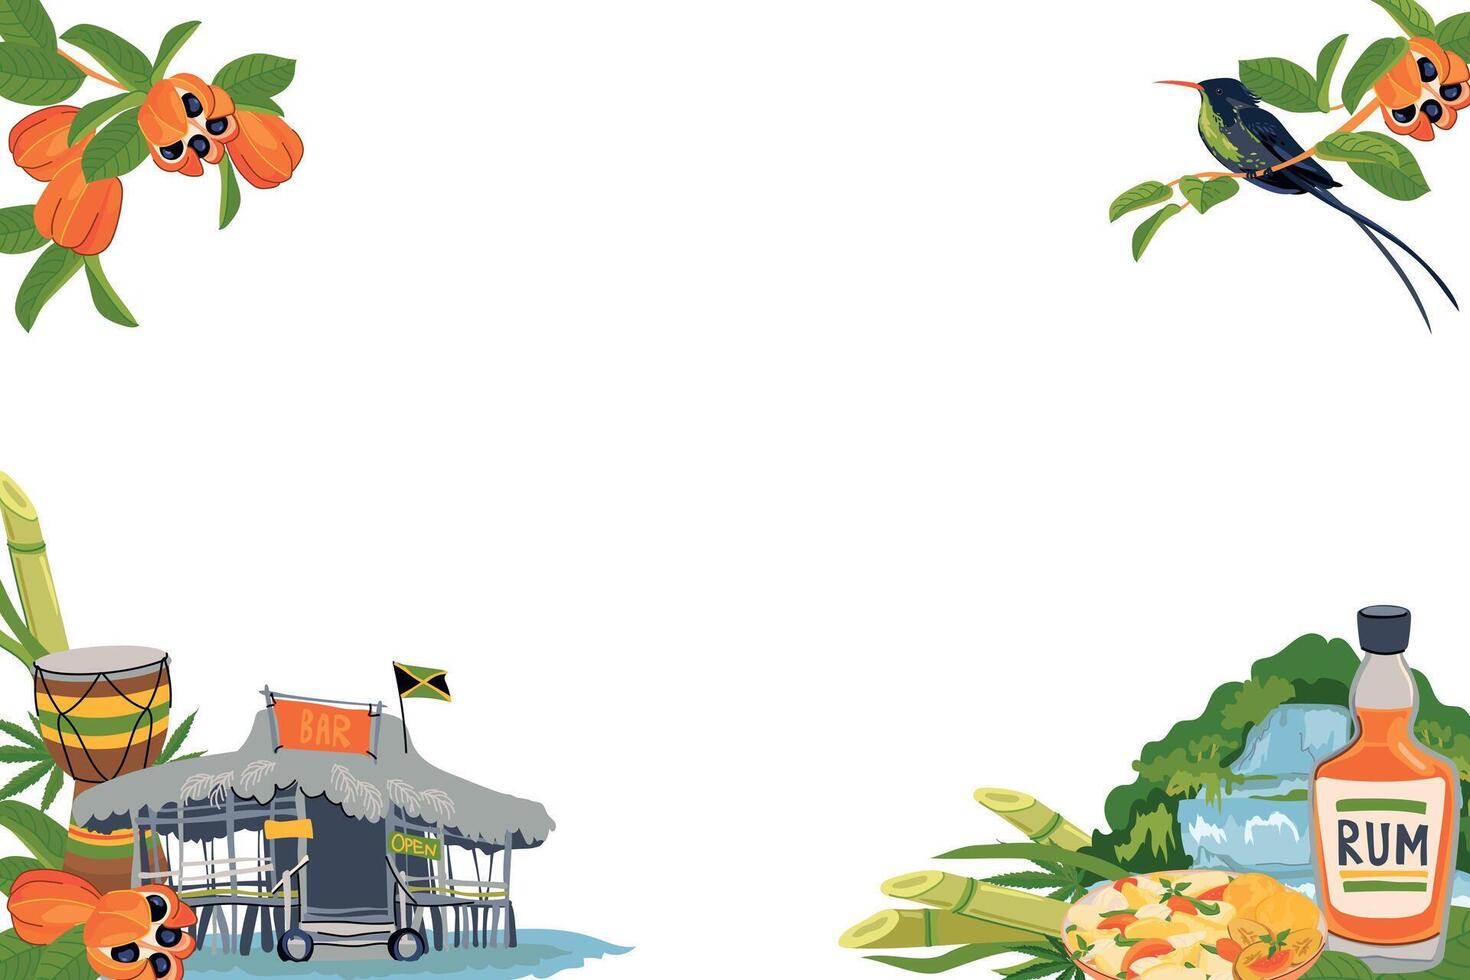 horizontal marco con puntos de referencia de Jamaica. tradicional alimento, colibrí, playa bar, nacional Fruta ackee, rastafarianismo, cascada, Ron. vector para el diseño de viaje folletos, turista mapas